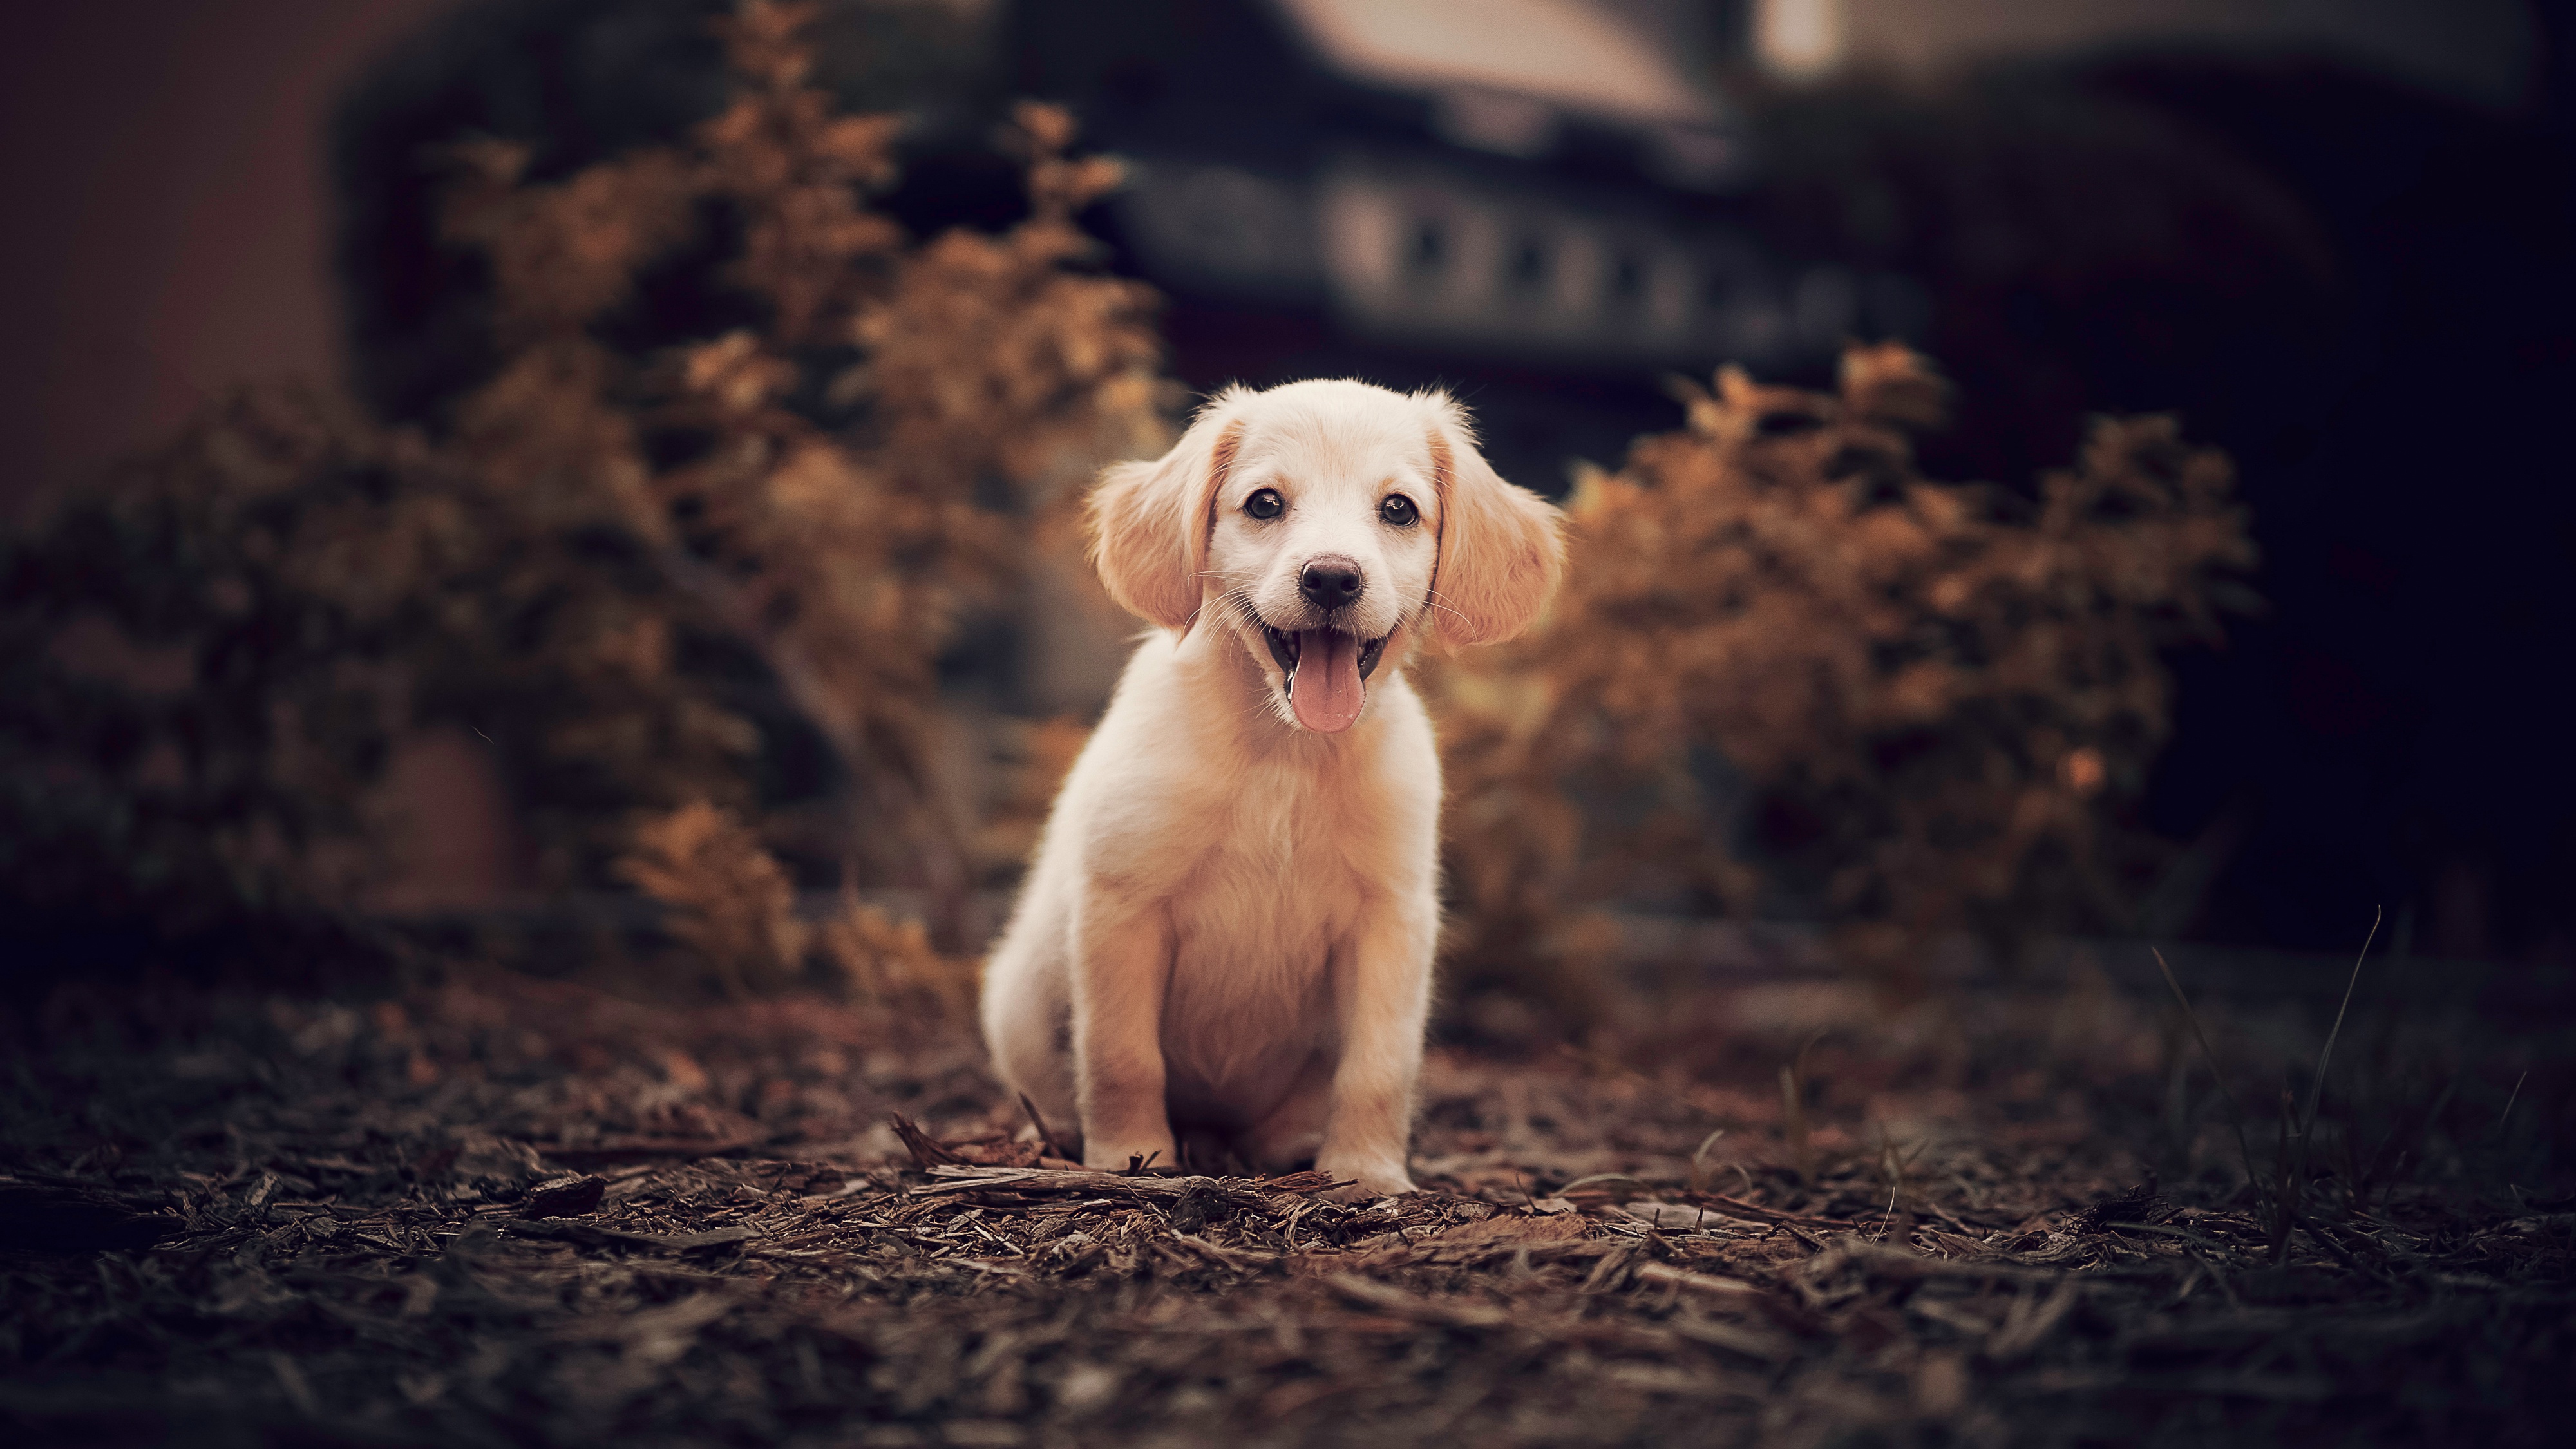 Baby Animal Dog Golden Retriever 4000x2250